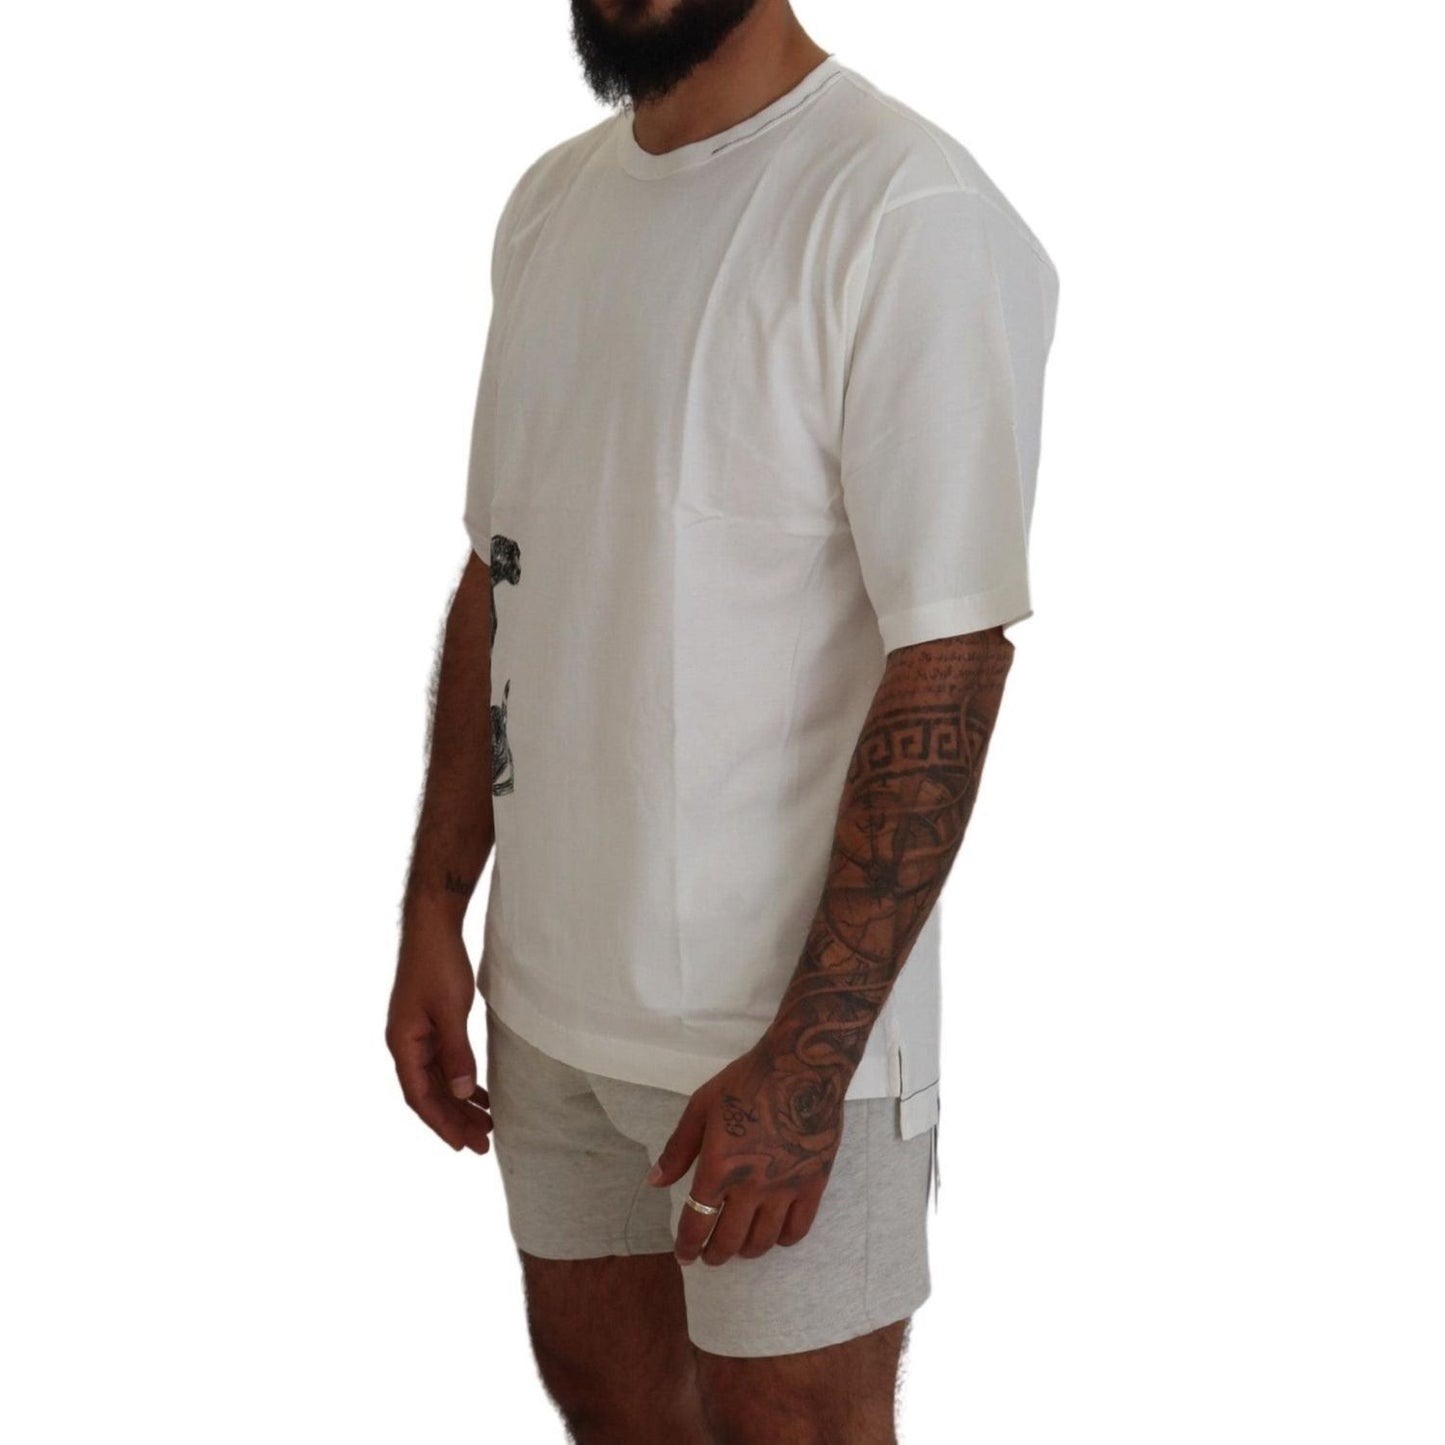 Dolce & Gabbana Elegant Crew Neck Cotton Tee white-printed-short-sleeves-mens-t-shirt IMG_1947-f9b1a206-103.jpg